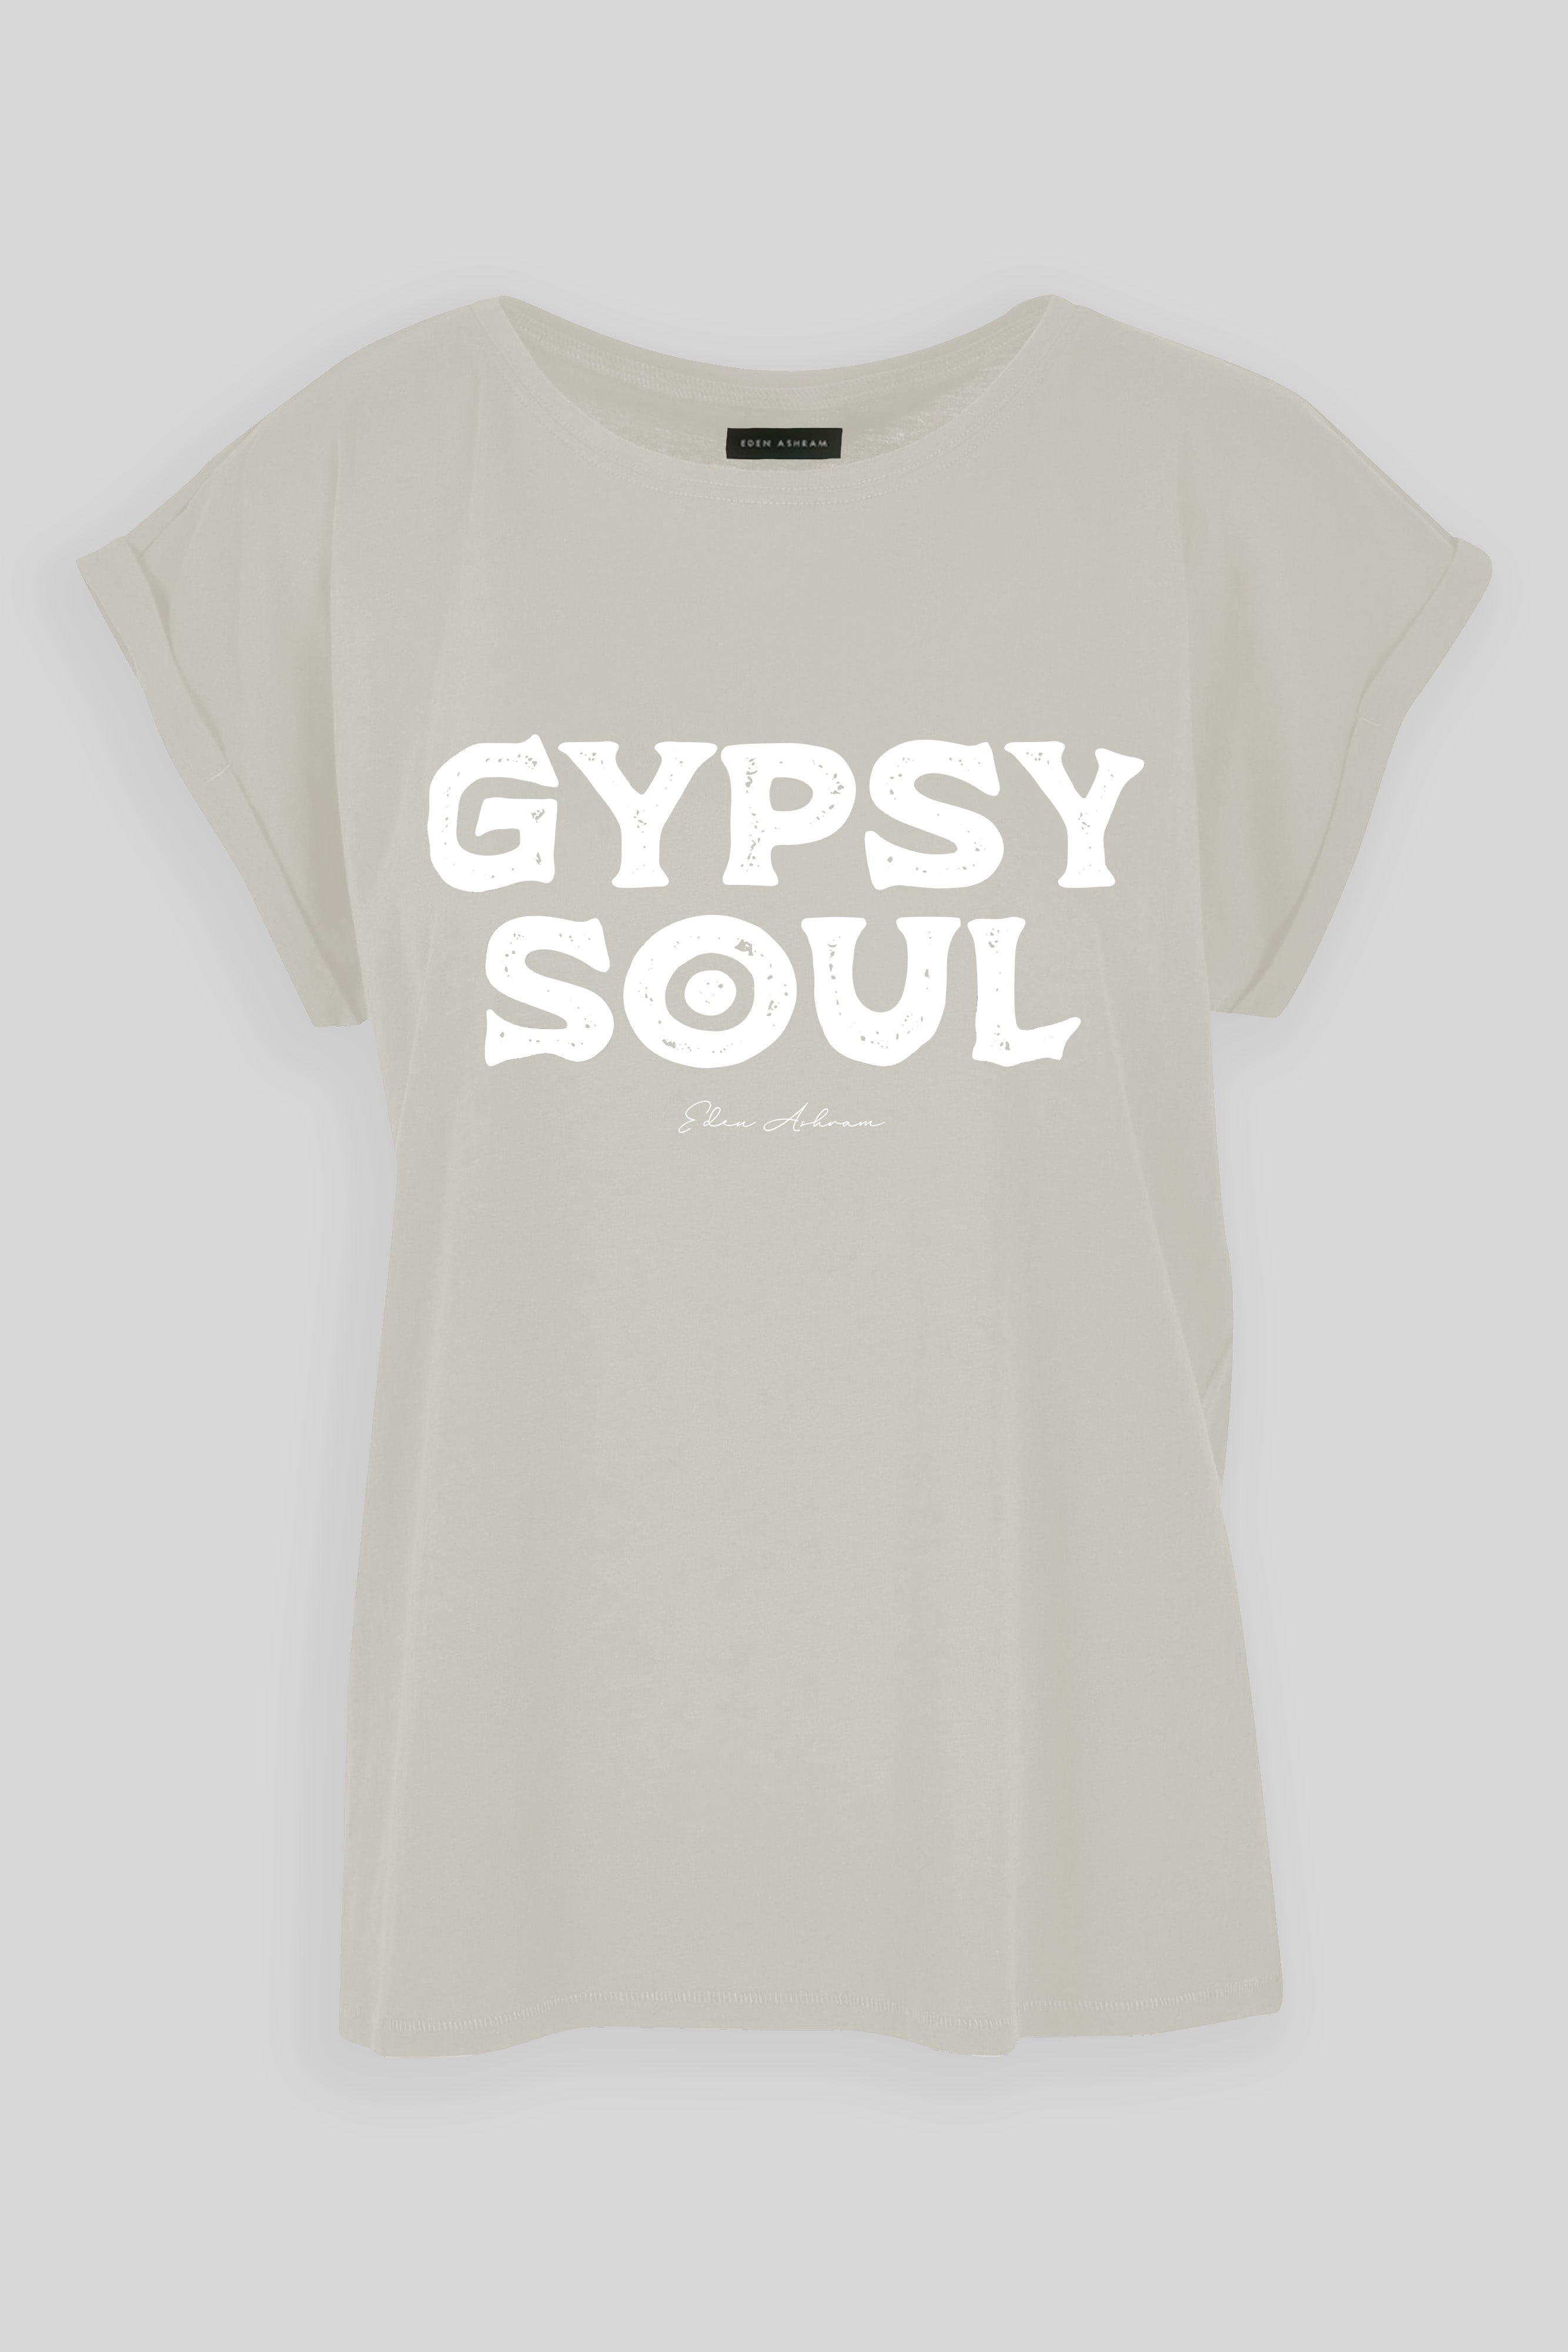 EDEN ASHRAM Gypsy Soul Cali T-Shirt Sand